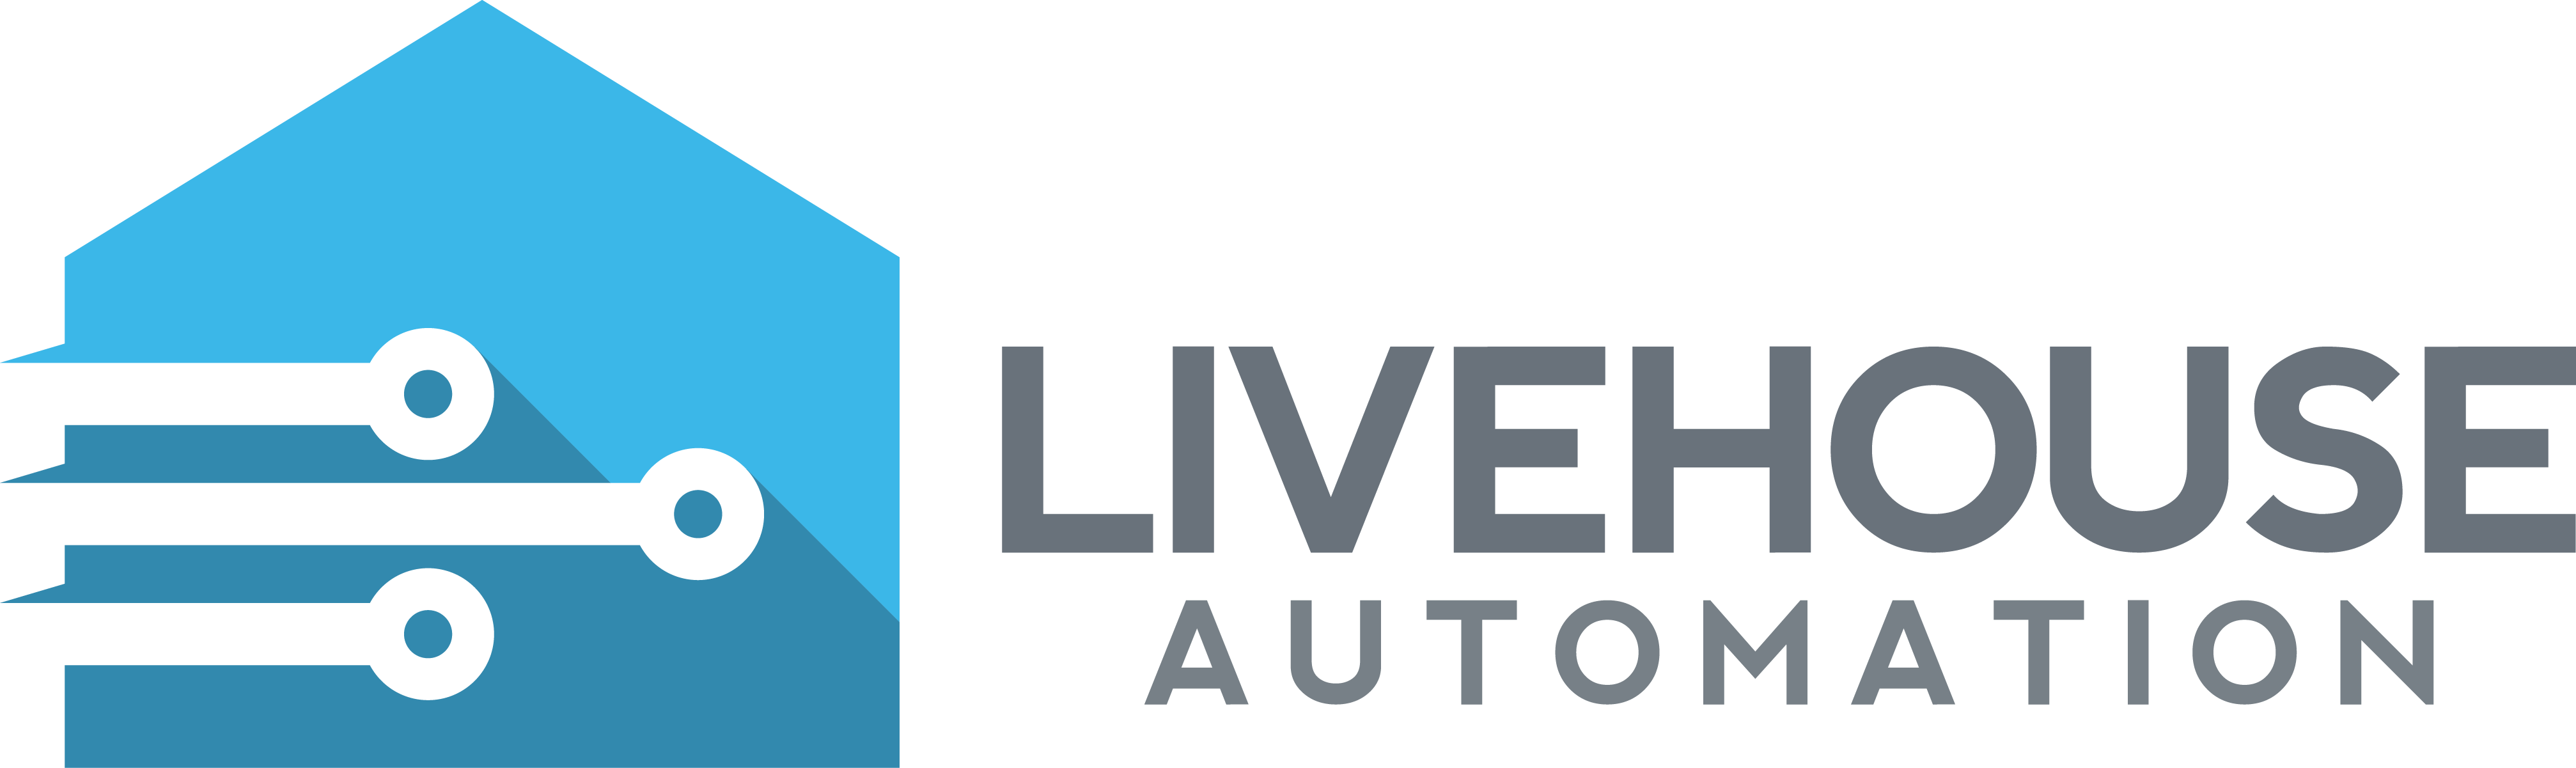 Livehouse Automation